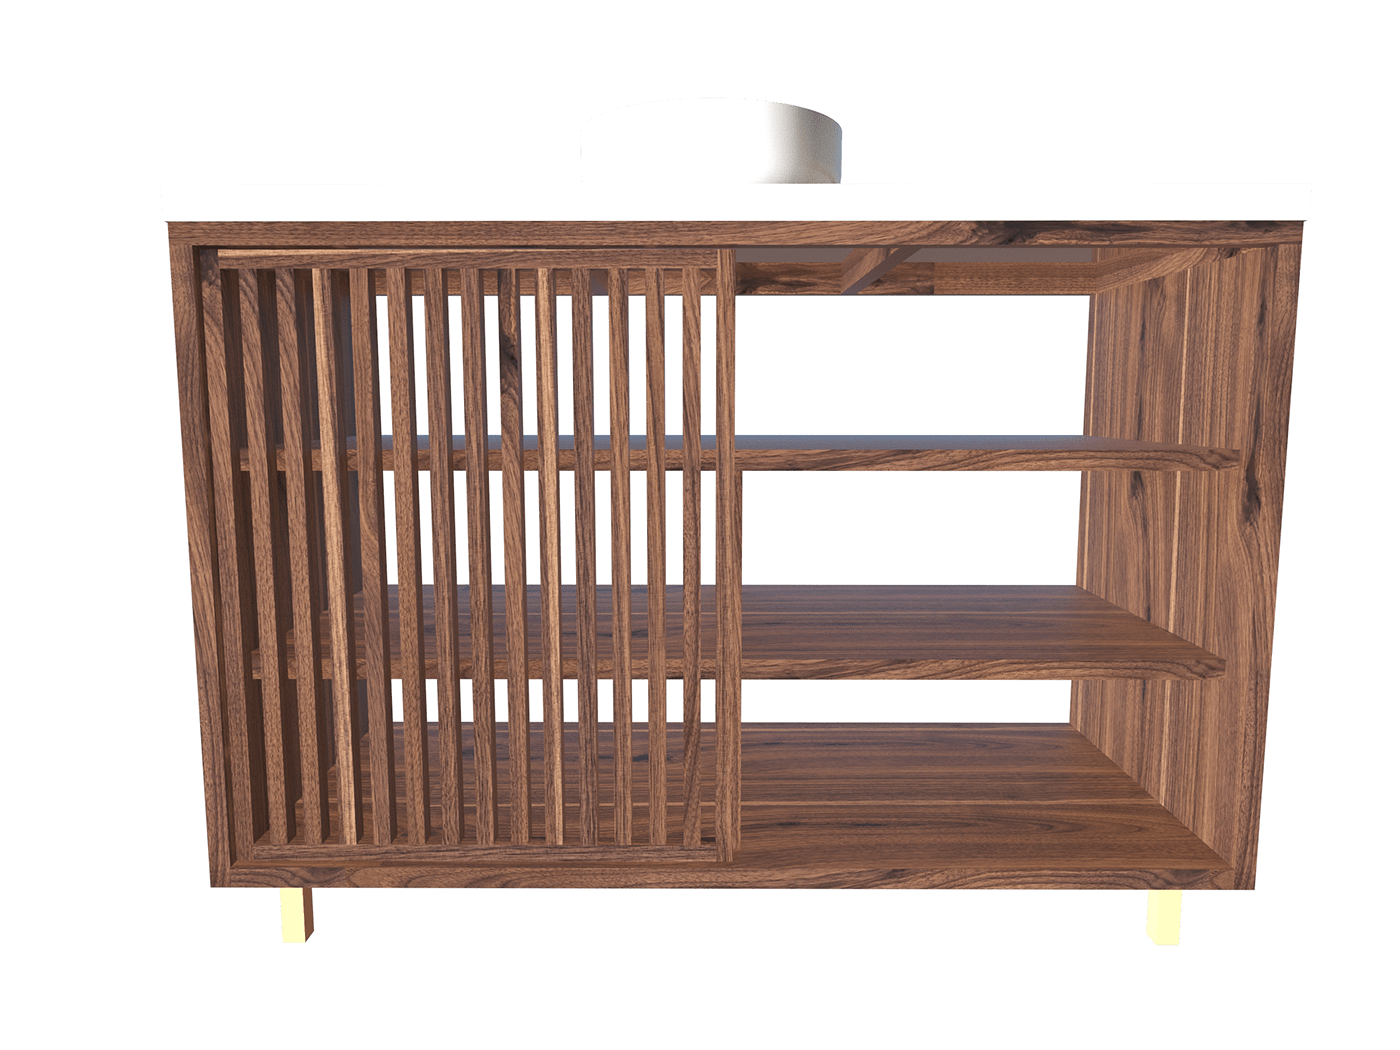 3d modeling 3D Rendering Architectural Plans architecture floor plans furniture interior design  rendering visualization